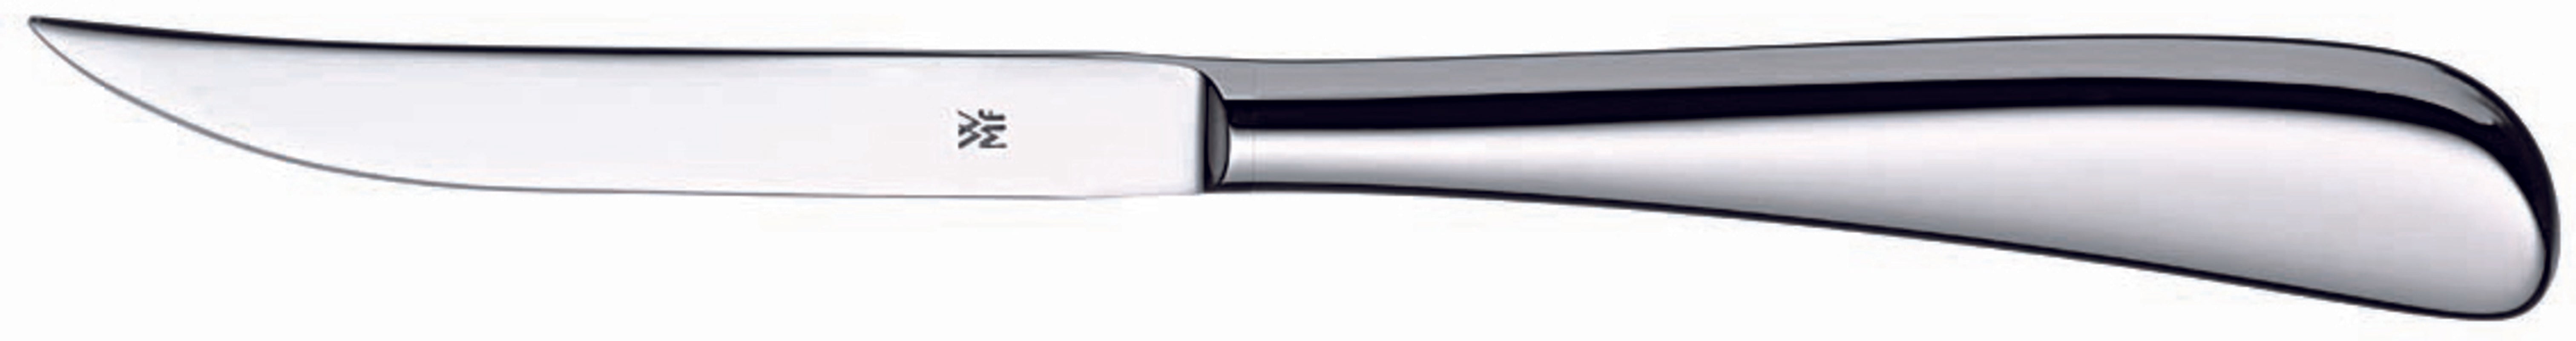 Steak Knife 8